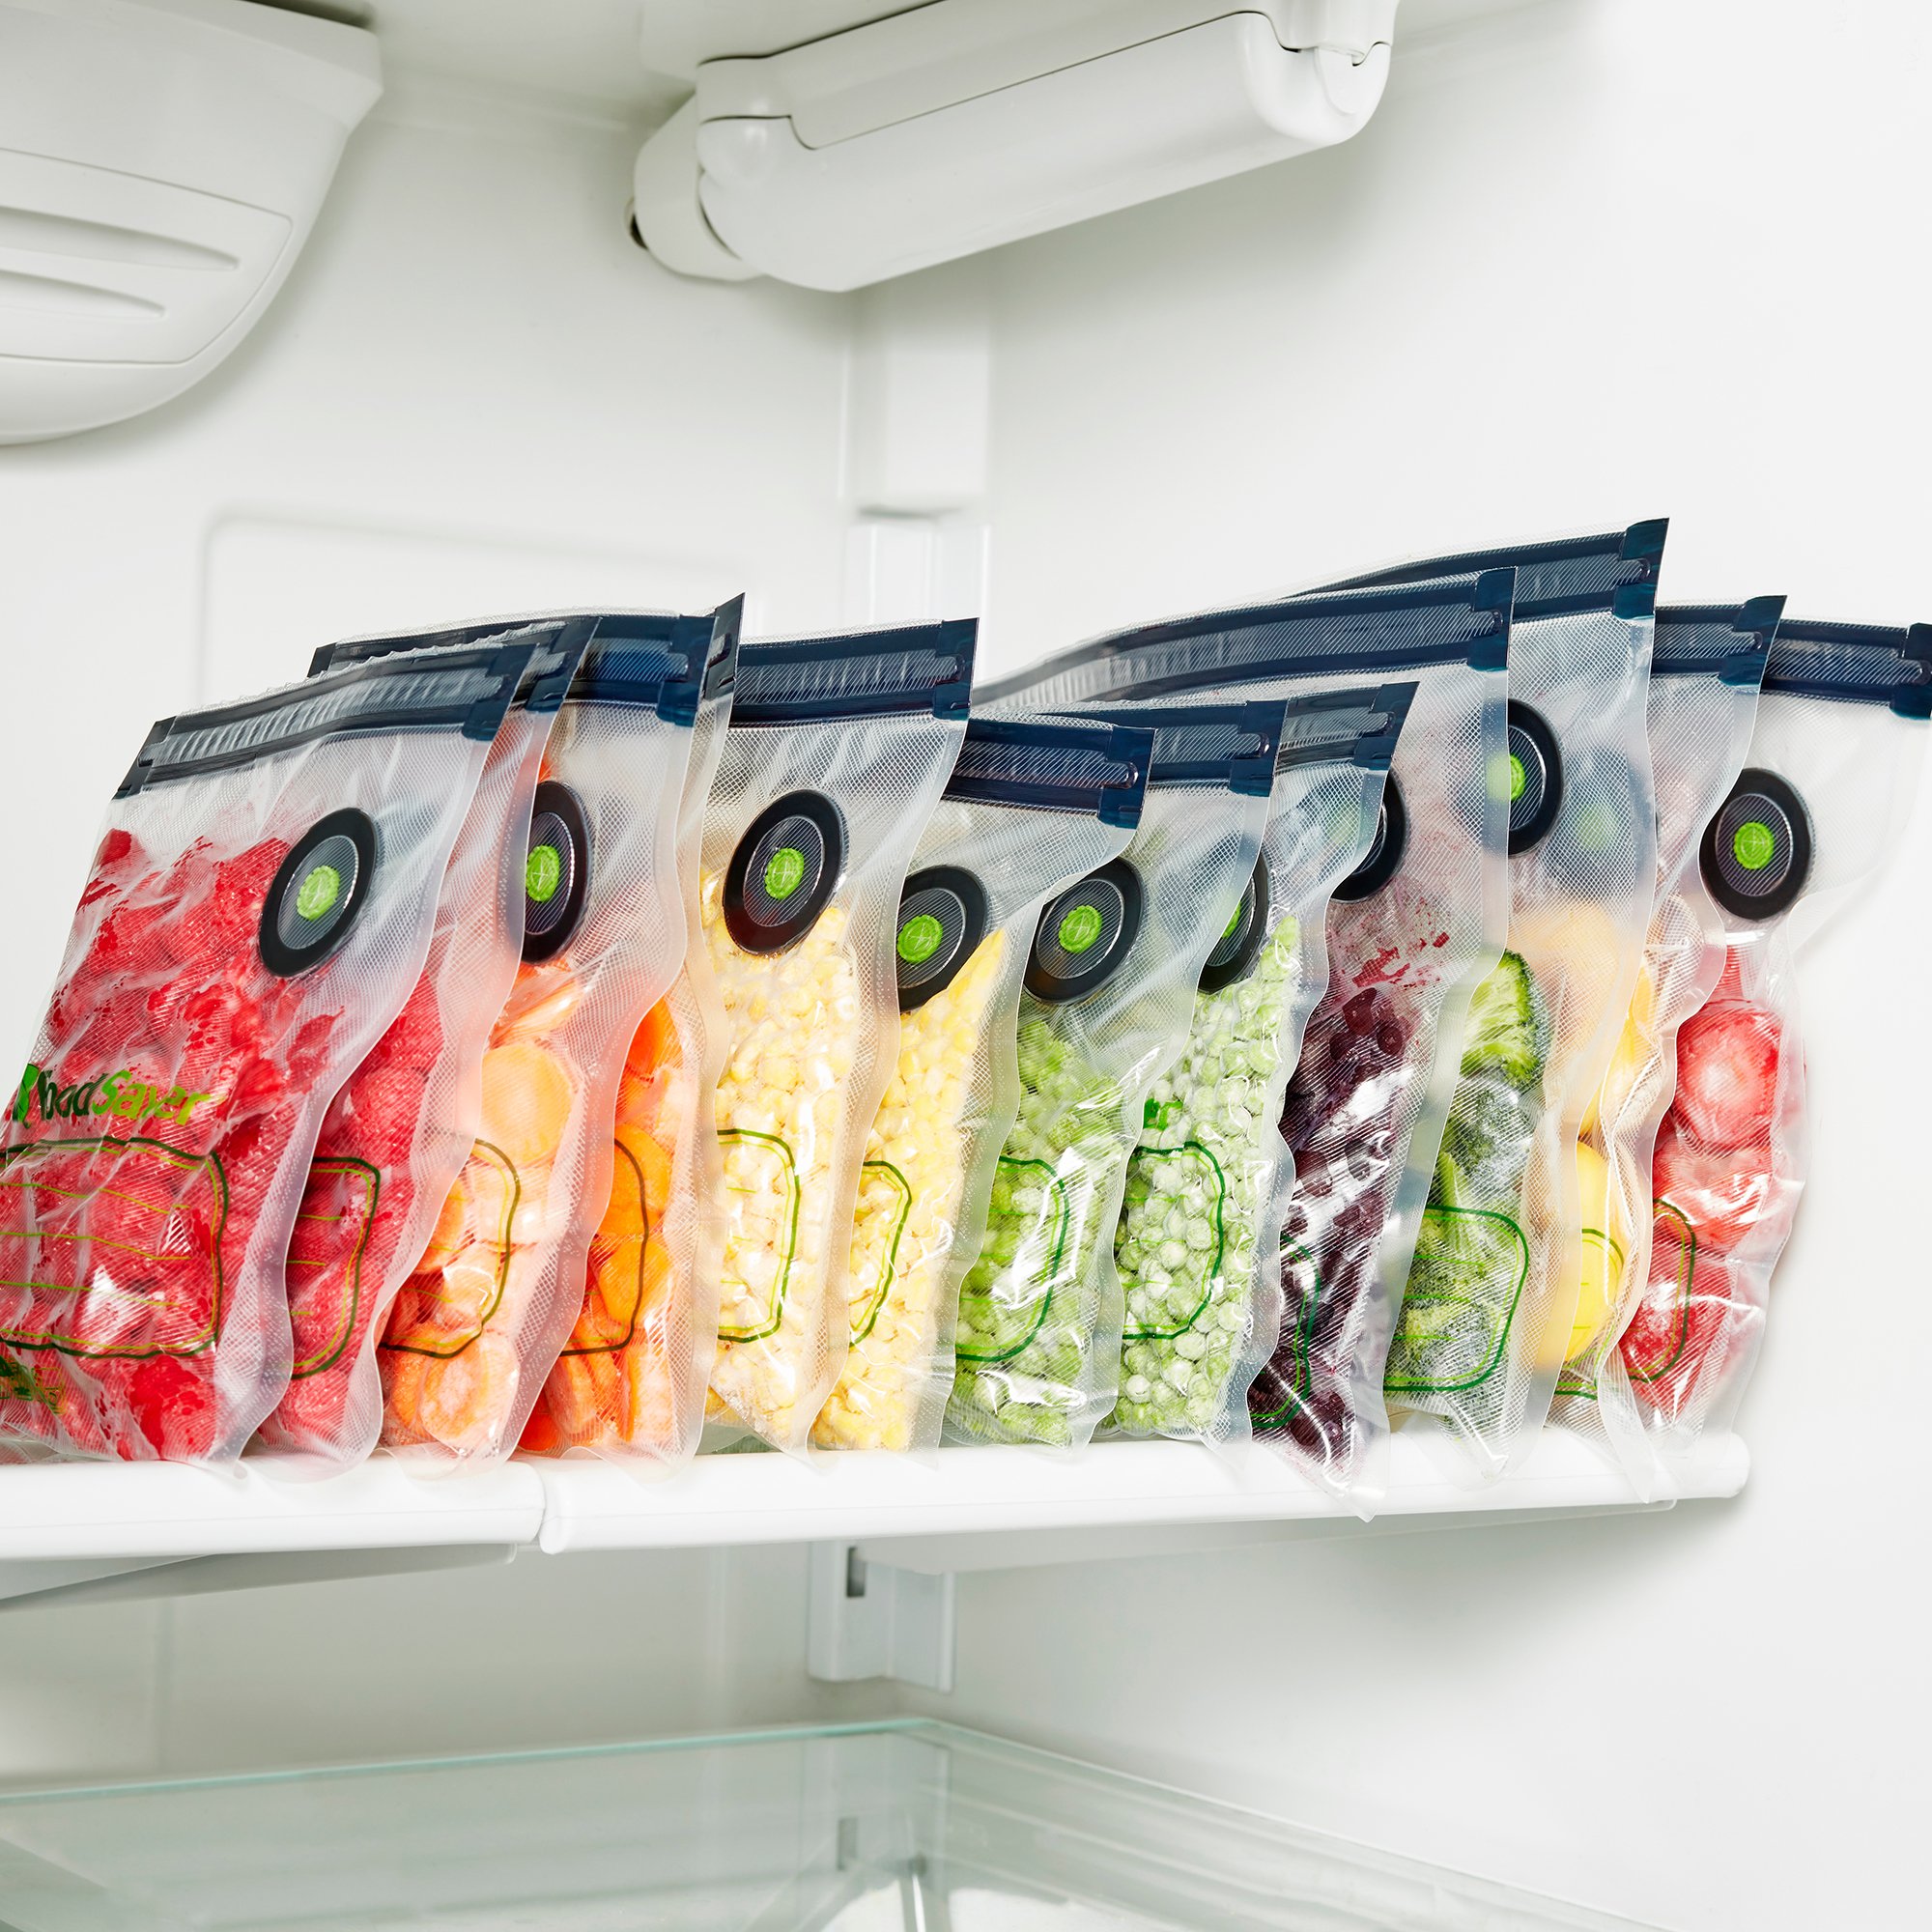 Dishwasher Safe Reusable Gallon Freezer Bags-7 Pack,Reusable Silicone